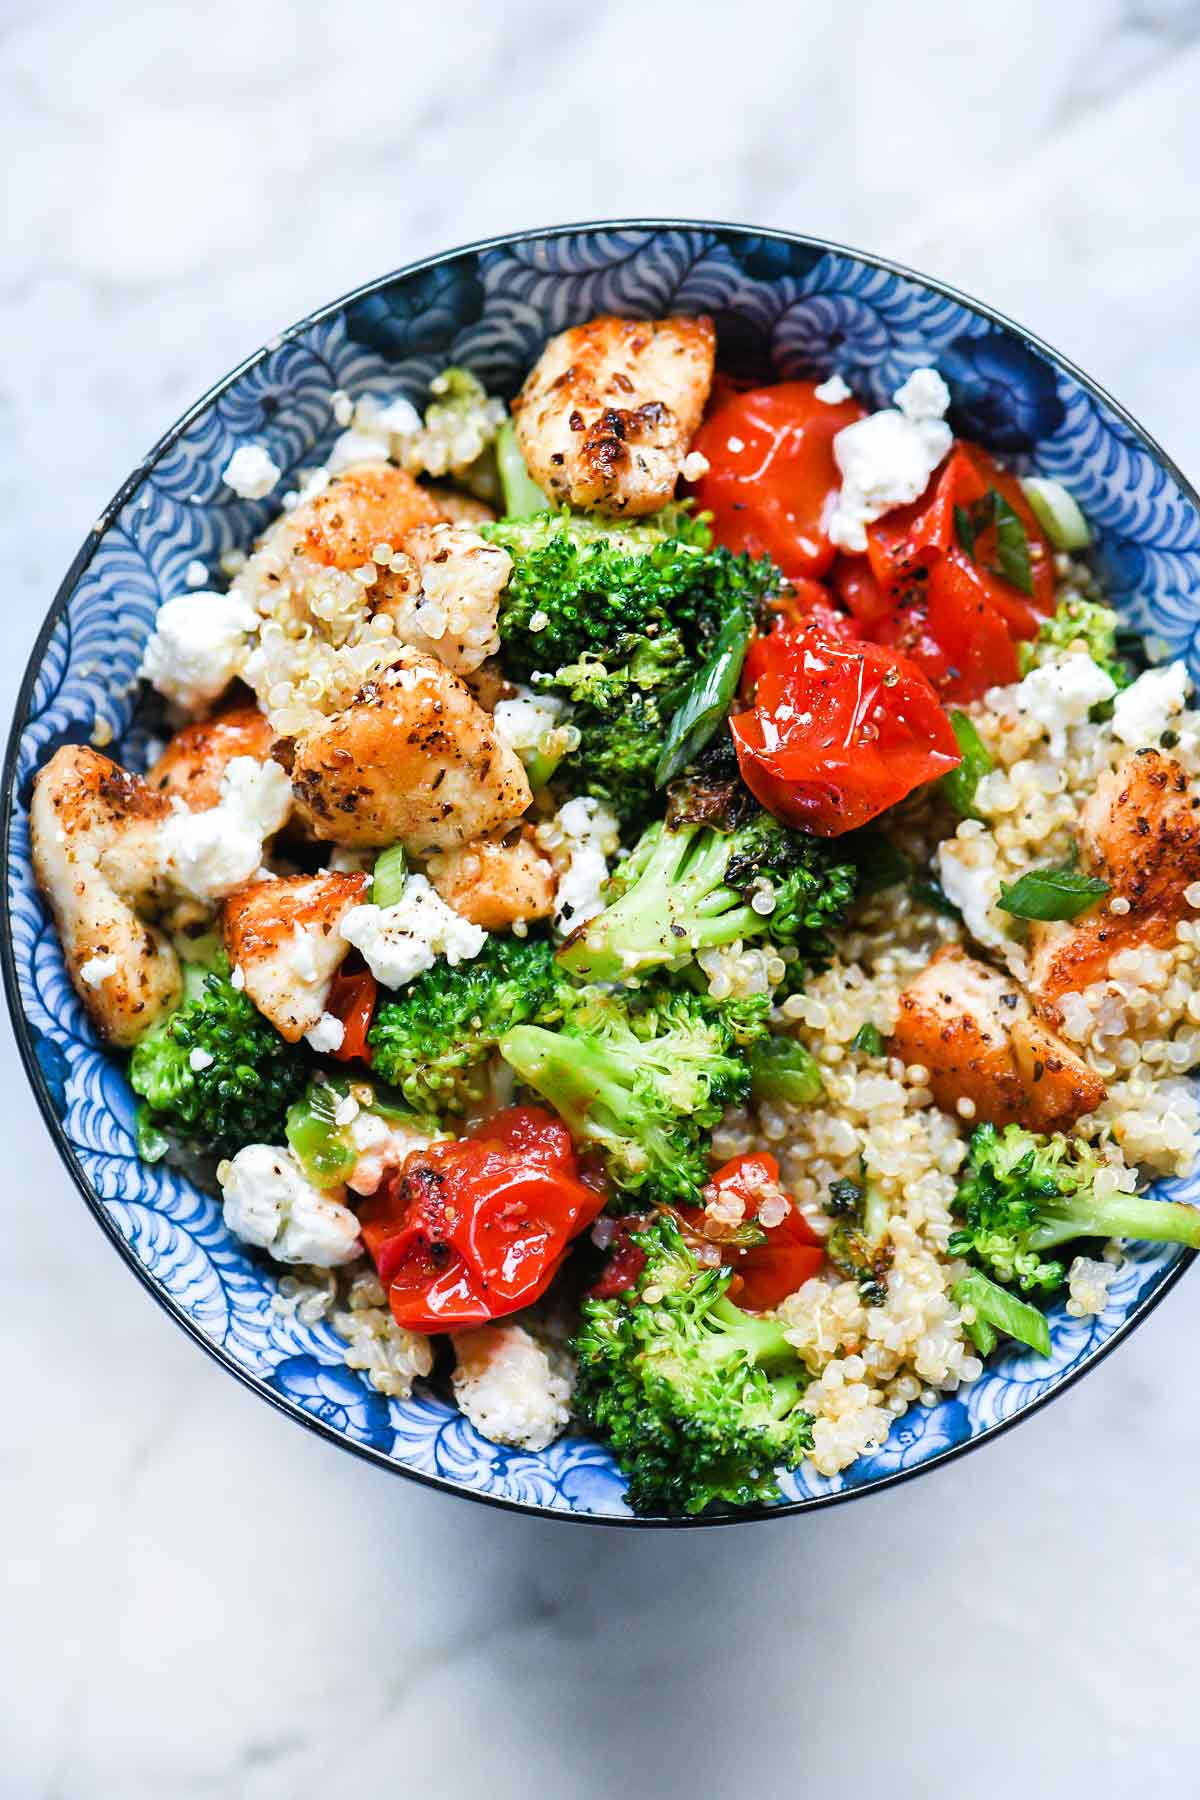 https://www.foodiecrush.com/wp-content/uploads/2018/02/Mediterranean-Chicken-Broccoli-and-Tomato-Quinoa-Bowls-foodiecrush.com-003.jpg